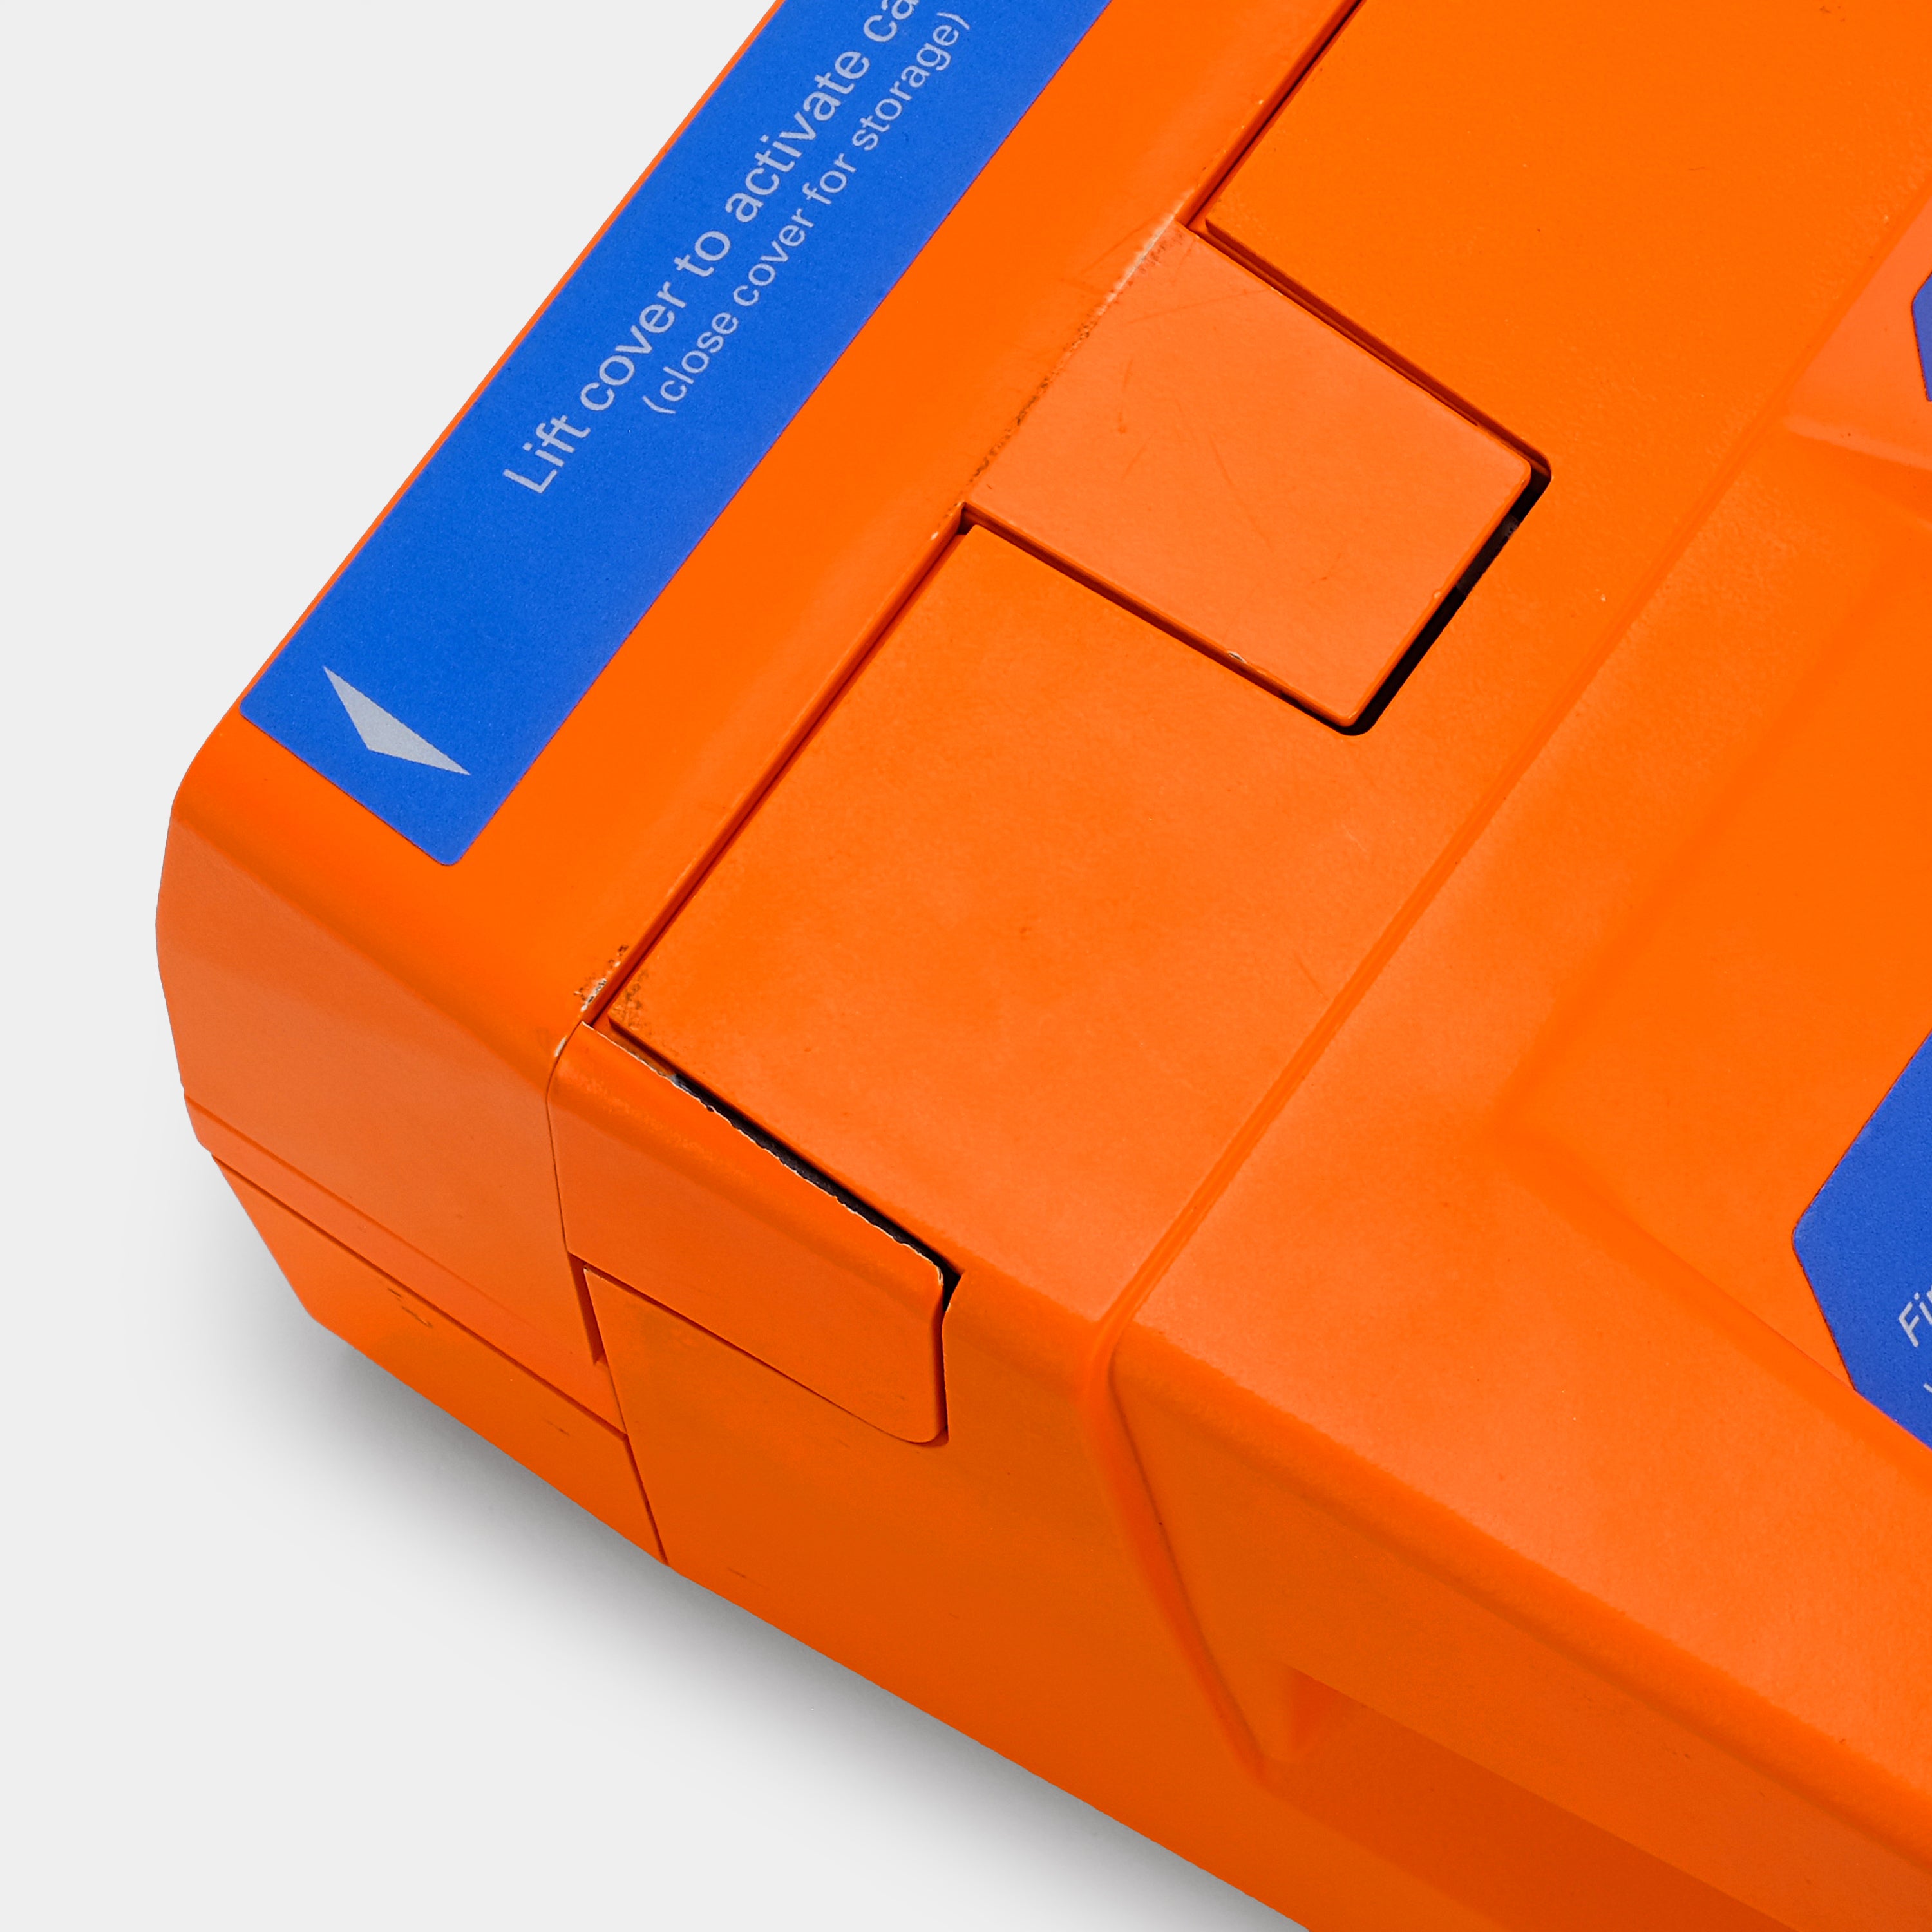 Polaroid 600 EMS PhotoSystem Fluorescent Orange Instant Film Camera